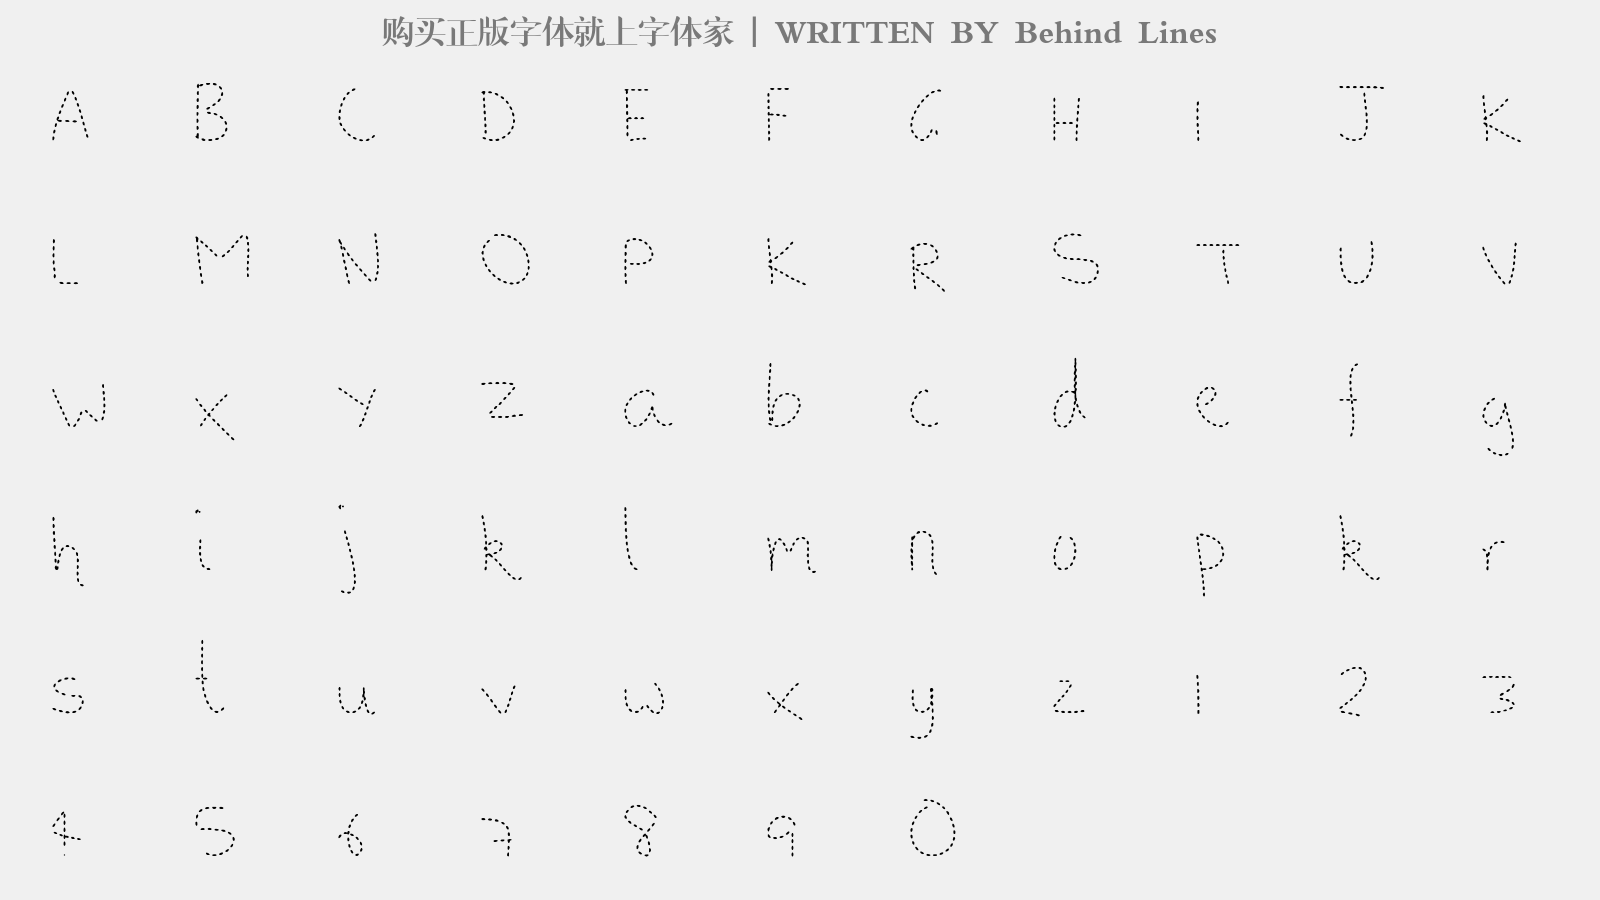 Behind Lines - 大写字母/小写字母/数字